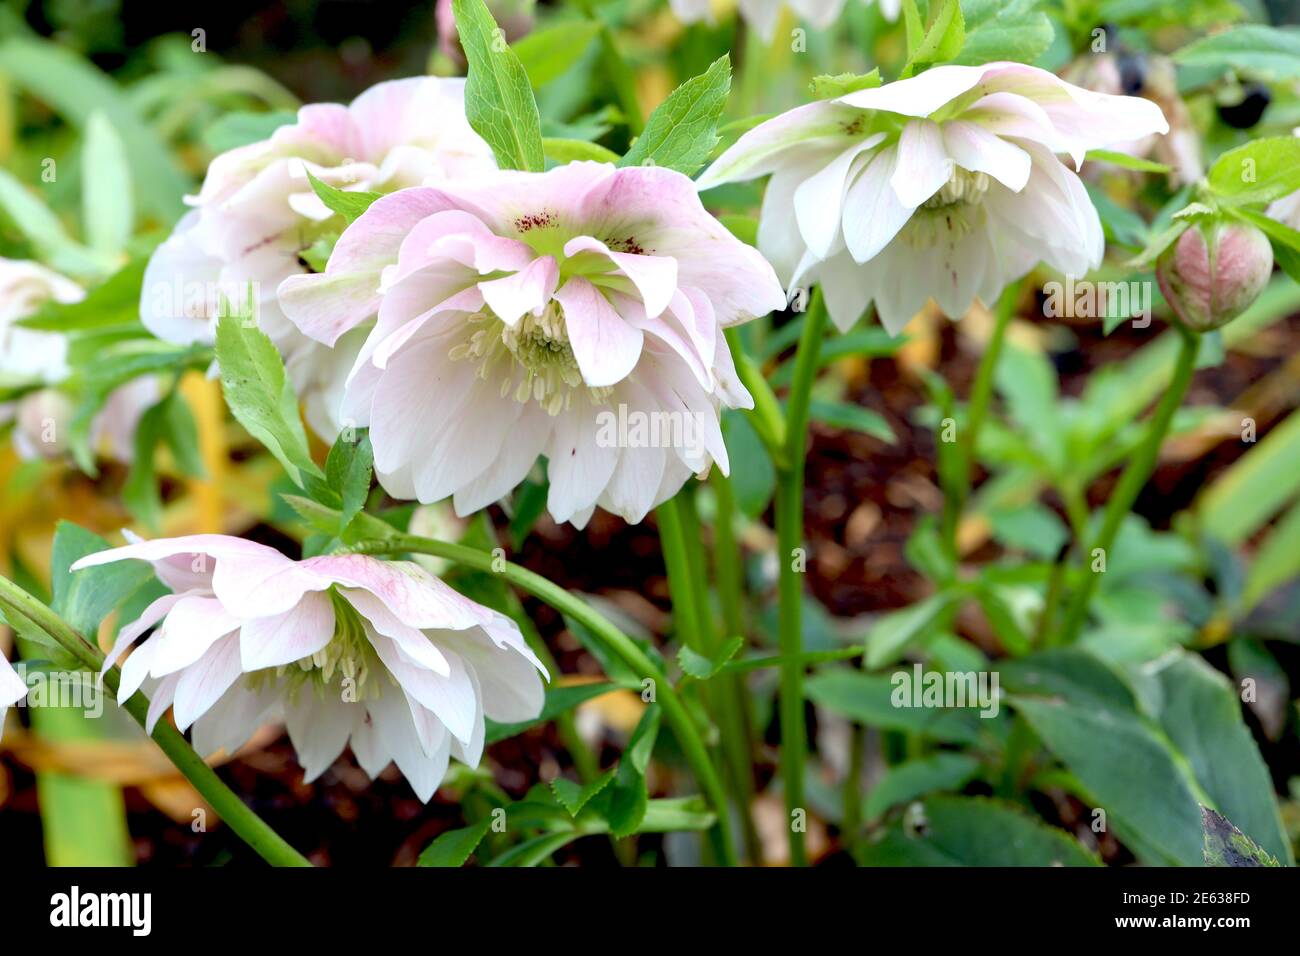 Helleborus x hybridus ‘Double Ellen White’ Double white hellebores – nodding double white flowers with pink tinges, January, England, UK Stock Photo